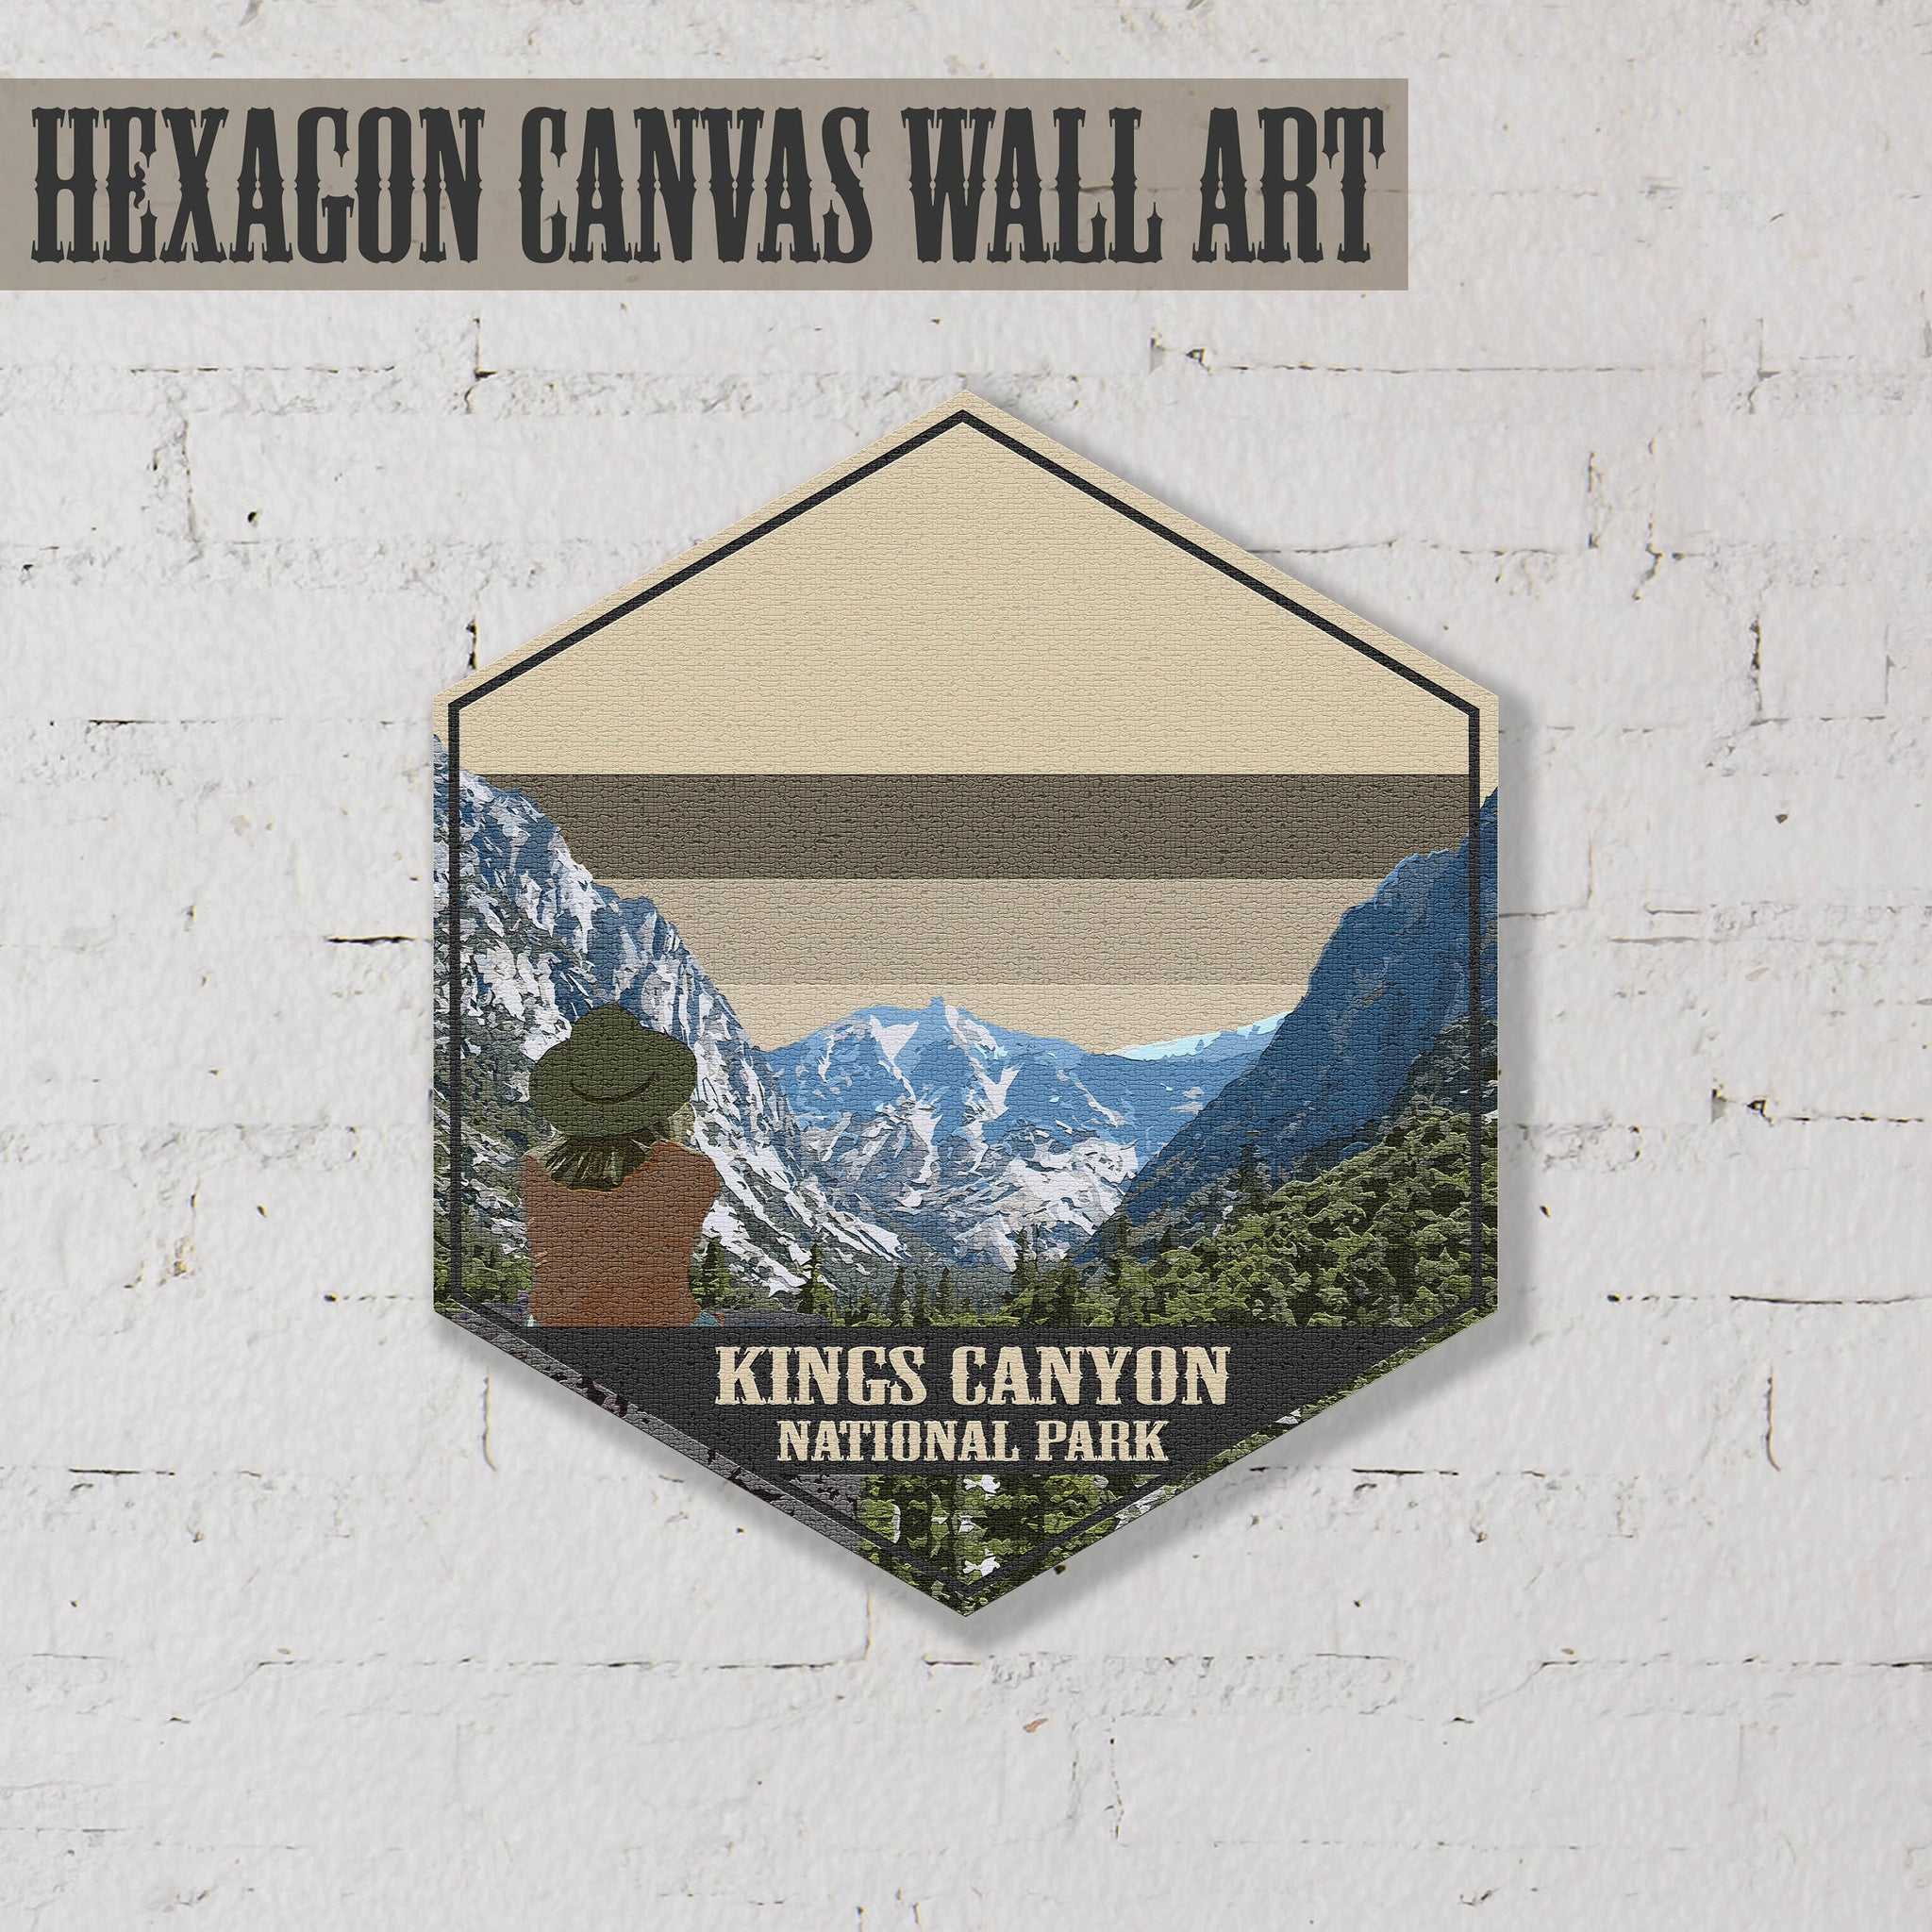 Kings Canyon, California National Park Travel Art - Hexagon Mountains